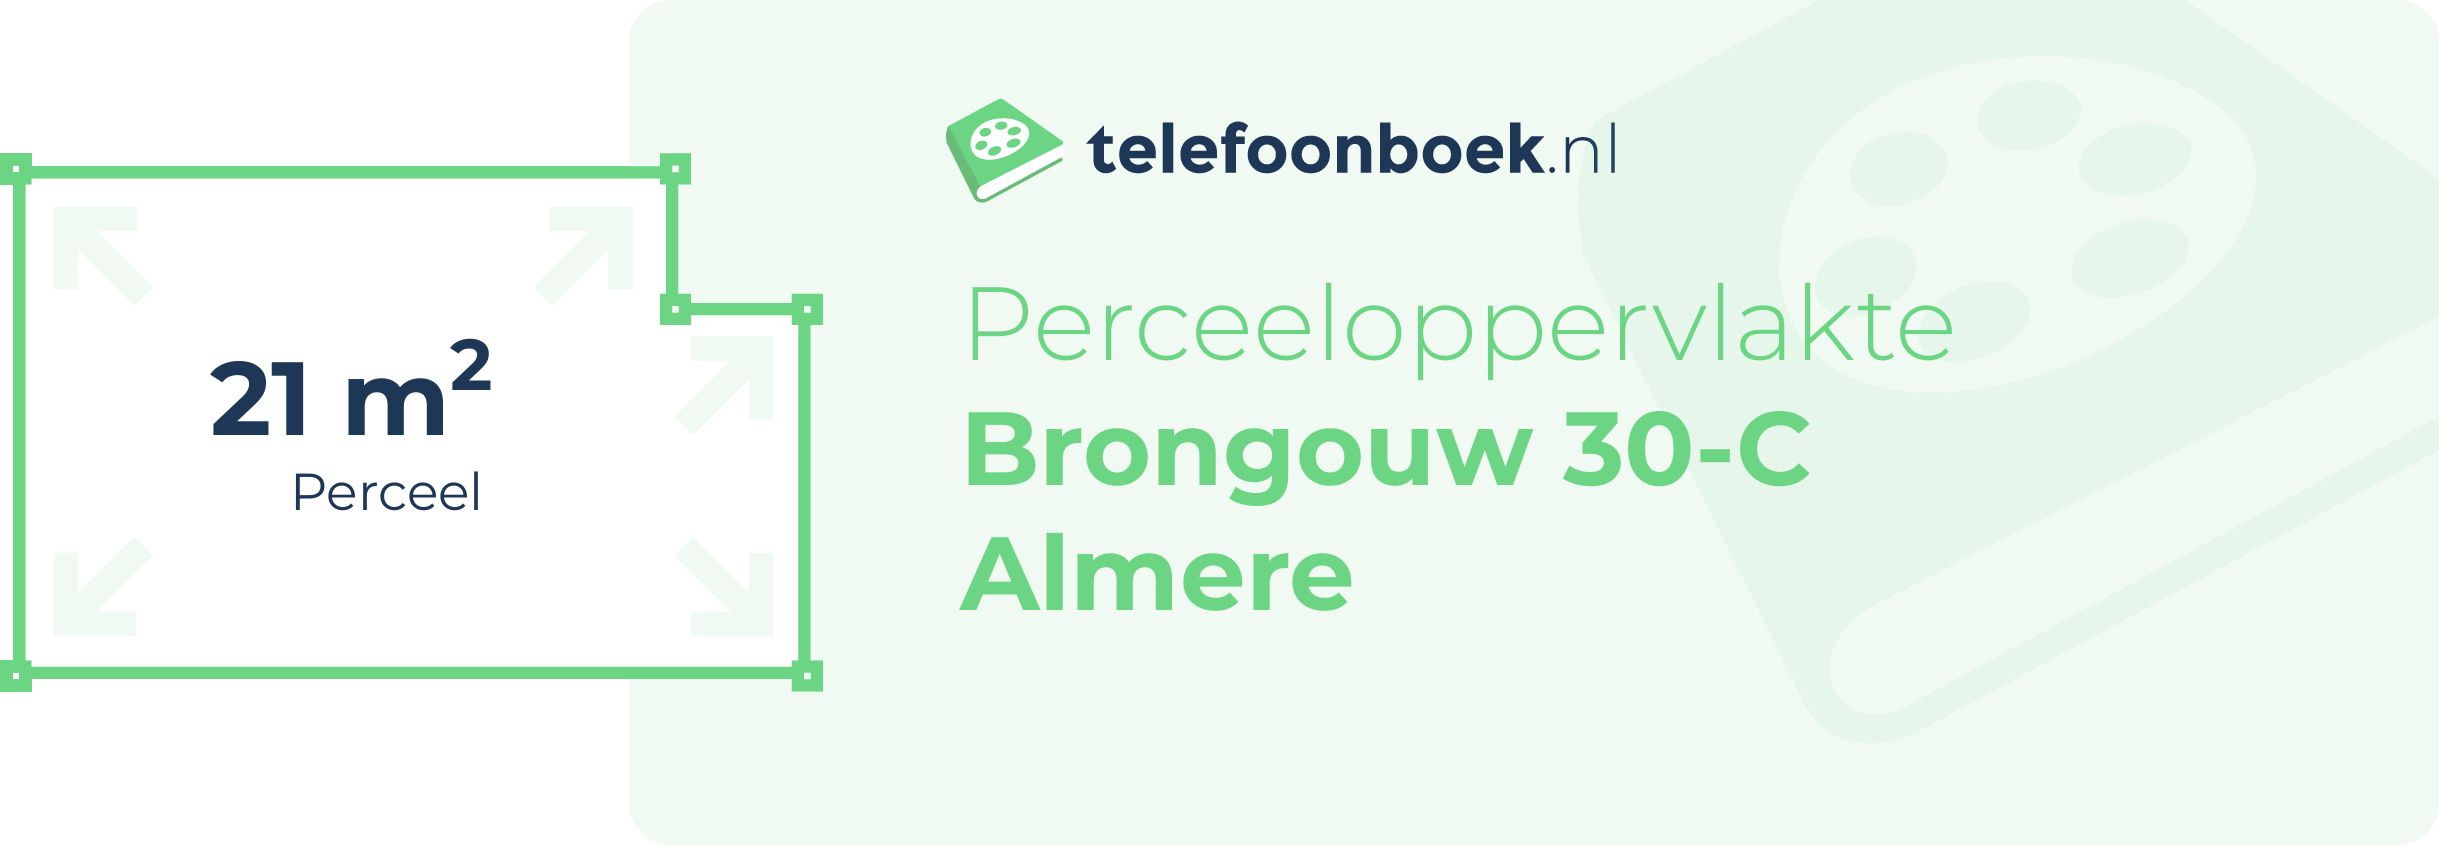 Perceeloppervlakte Brongouw 30-C Almere